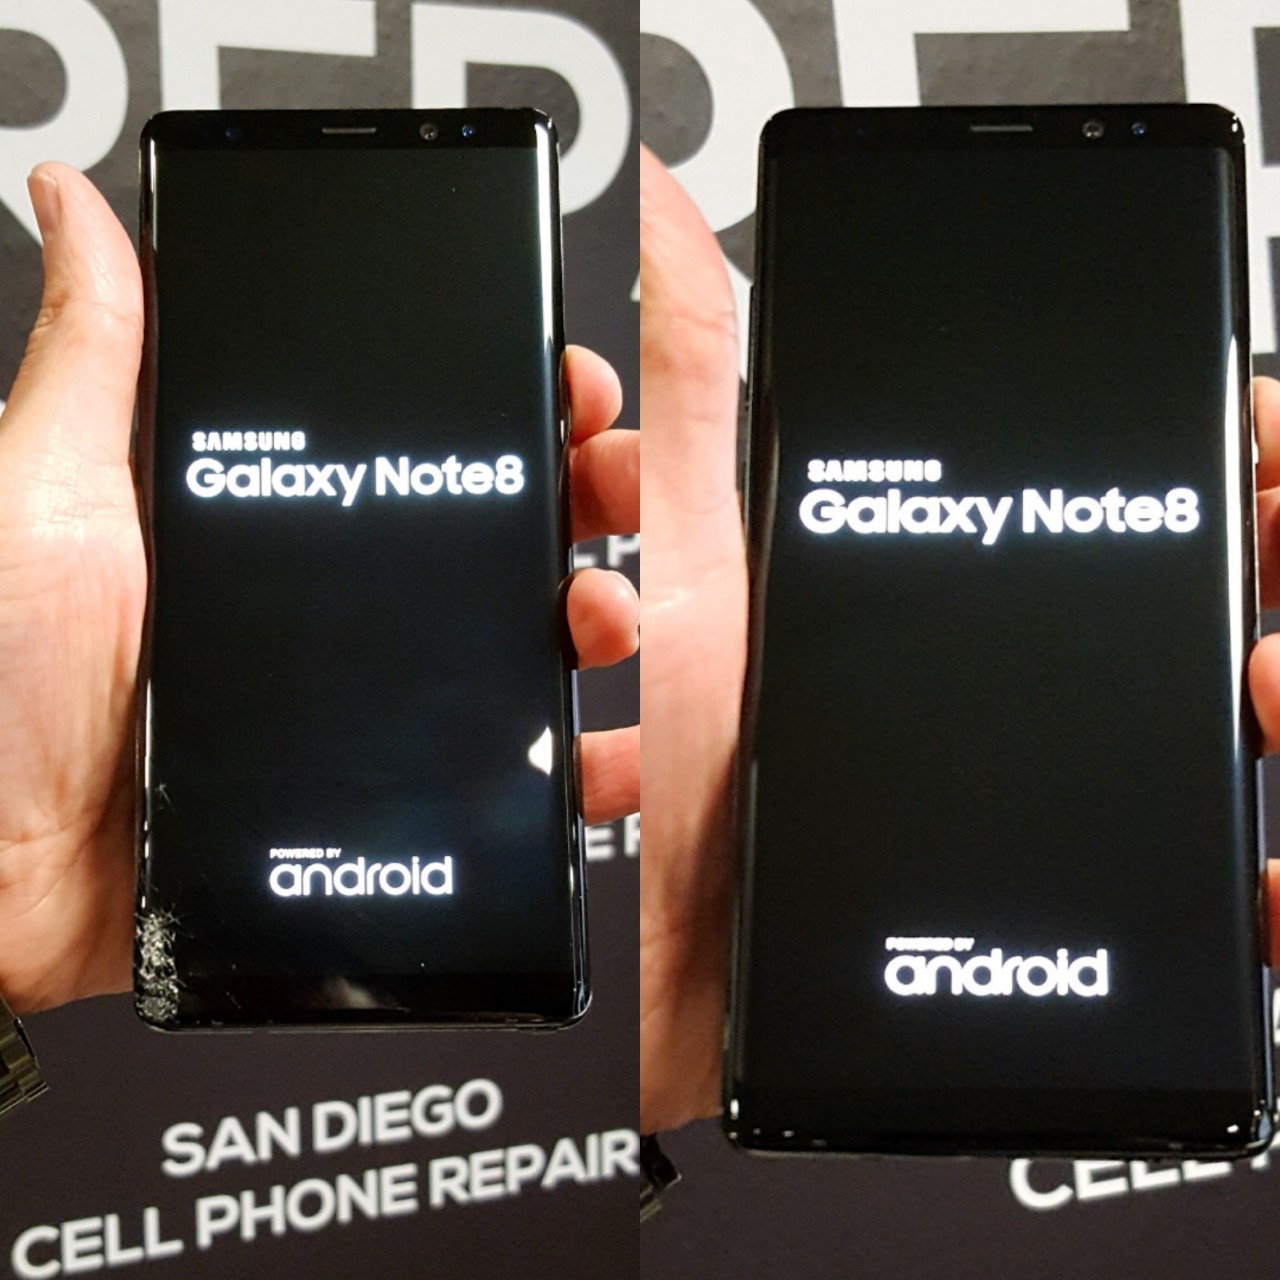 Samsung Galaxy Note 8.0 revelado por accidente